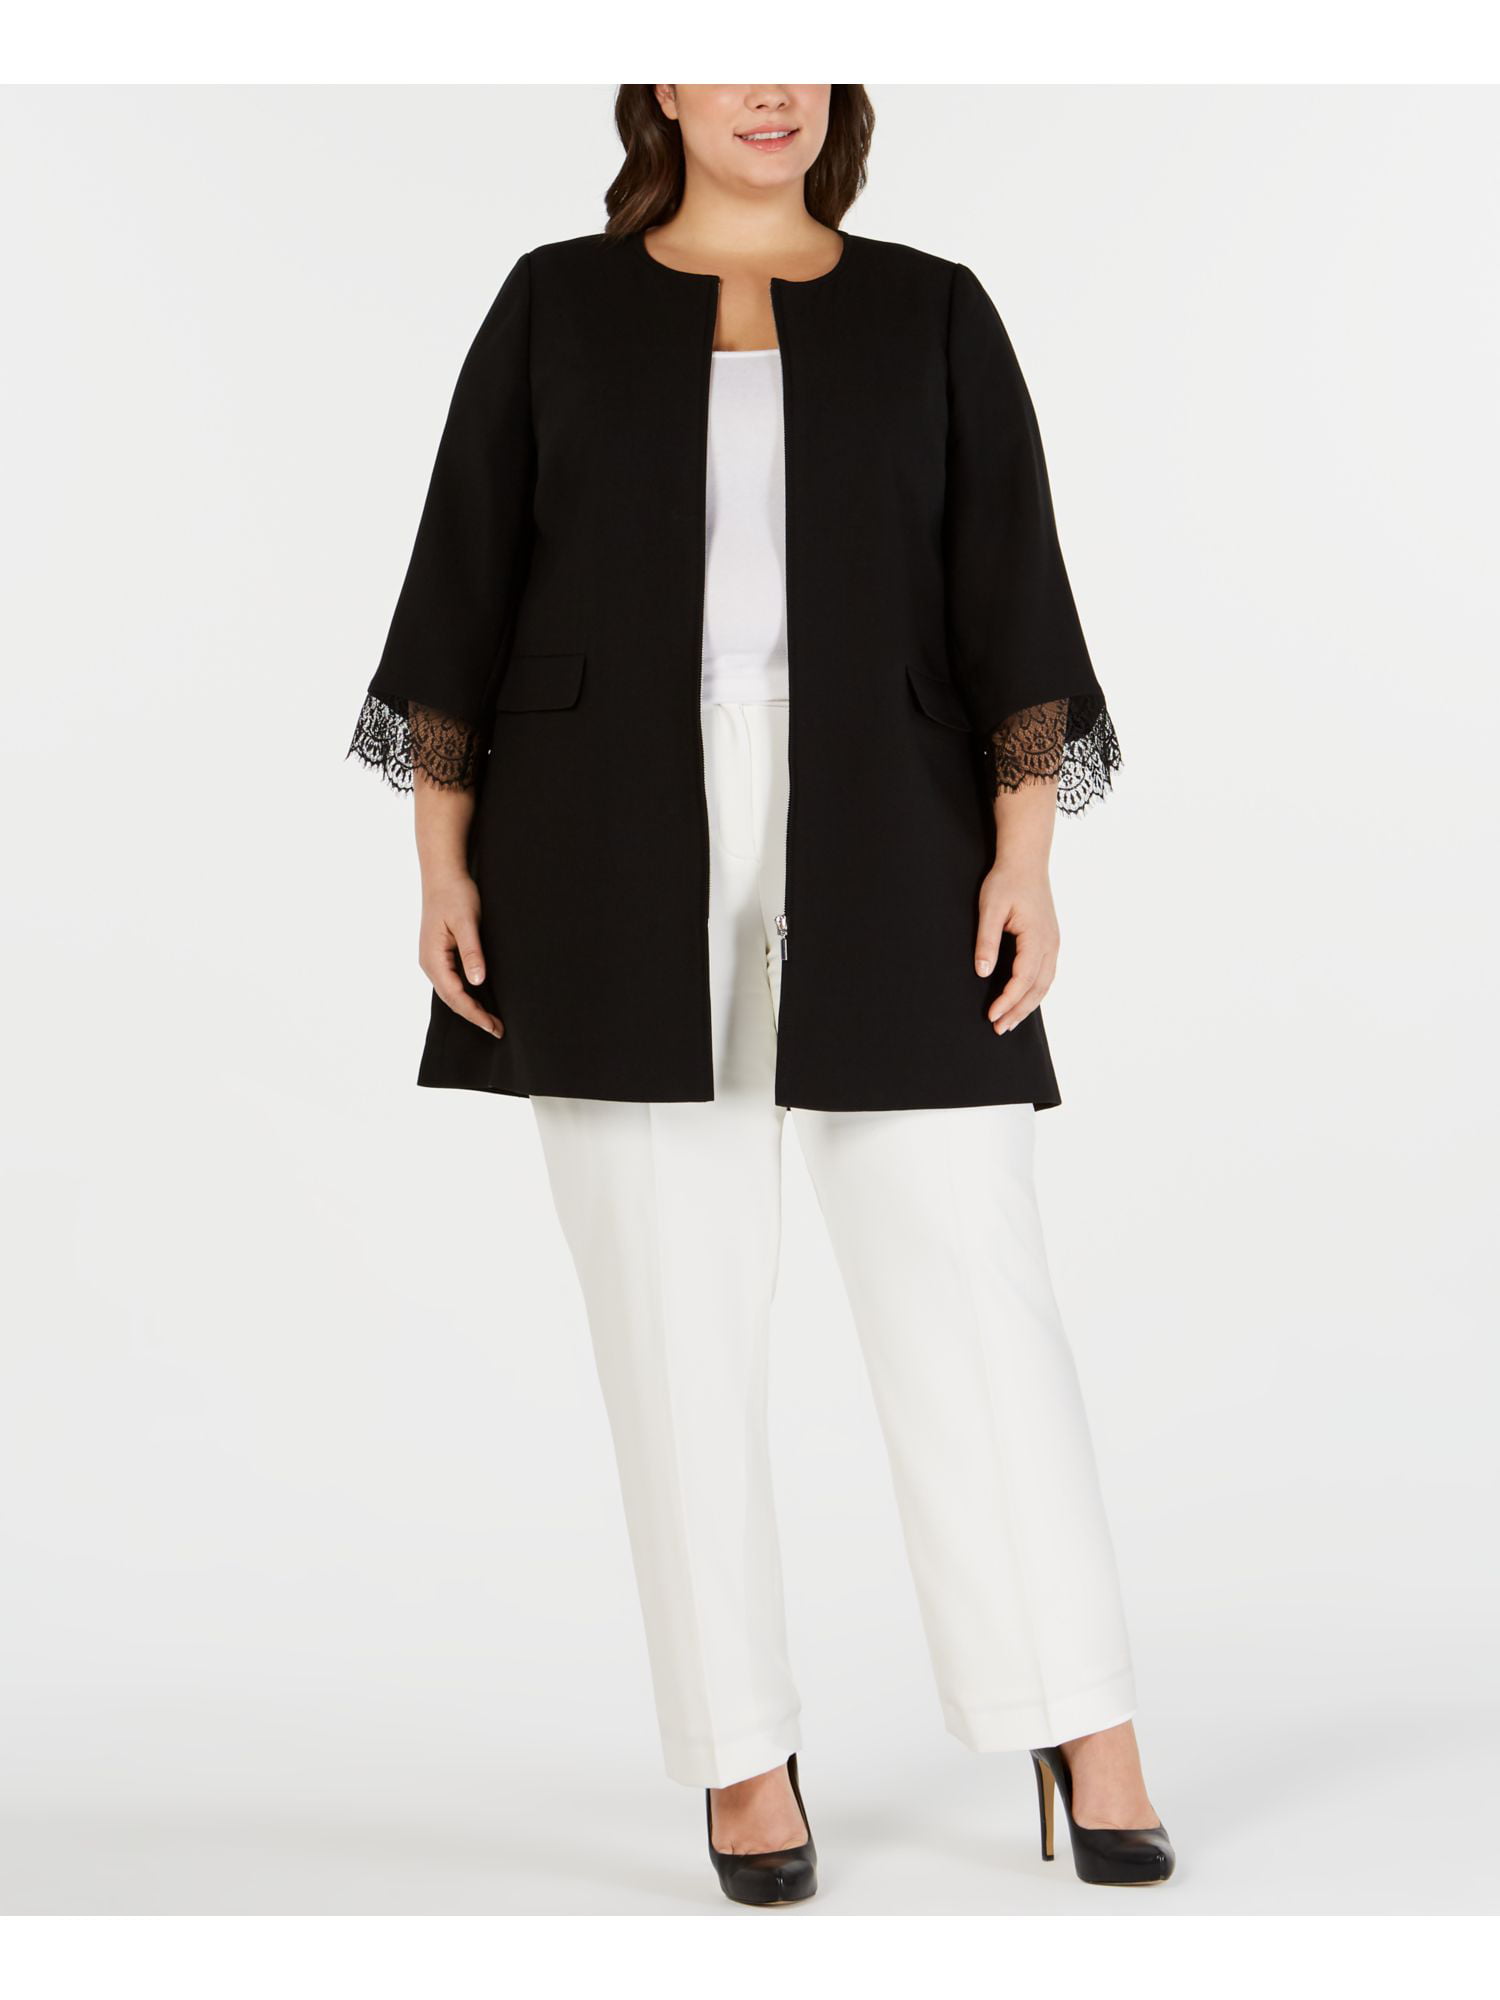 Alfani - ALFANI Womens Black Zip Up Wear To Work Jacket Size 2X -  Walmart.com - Walmart.com